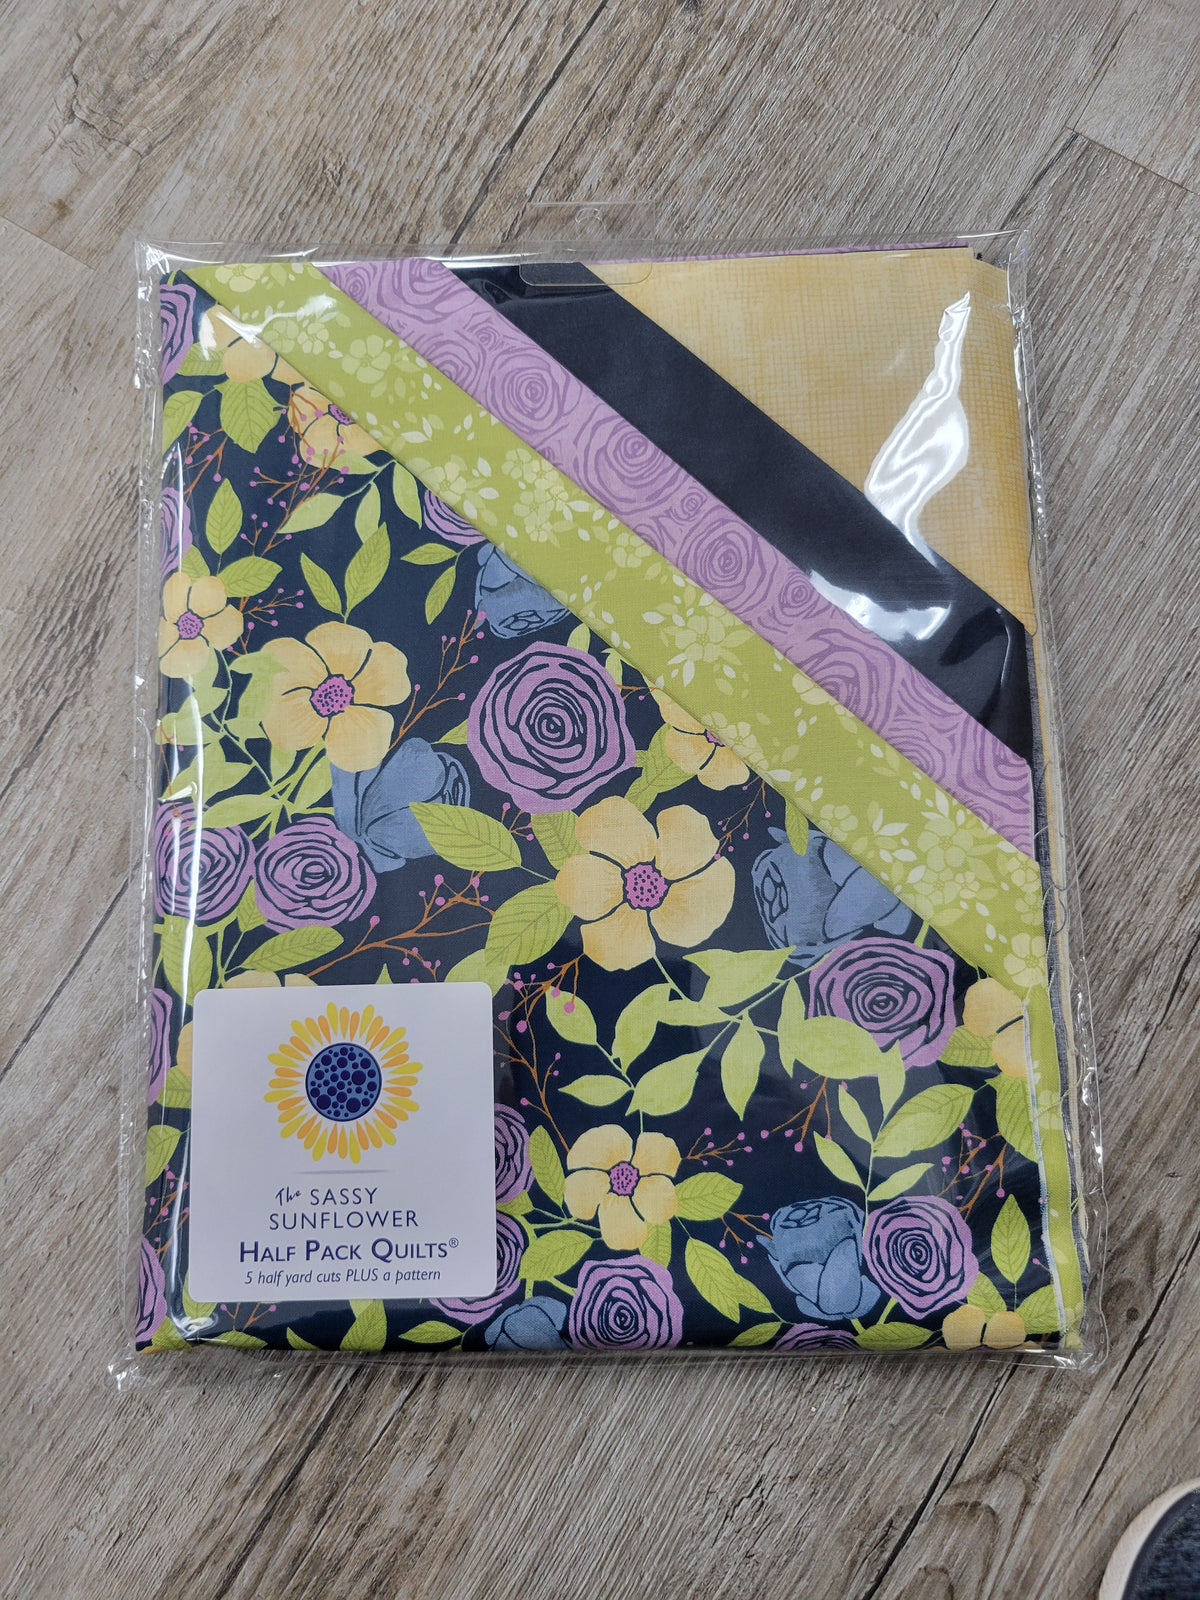 Moonlight Garden - The Sassy Sunflower Half Pack Quilts™ Kit